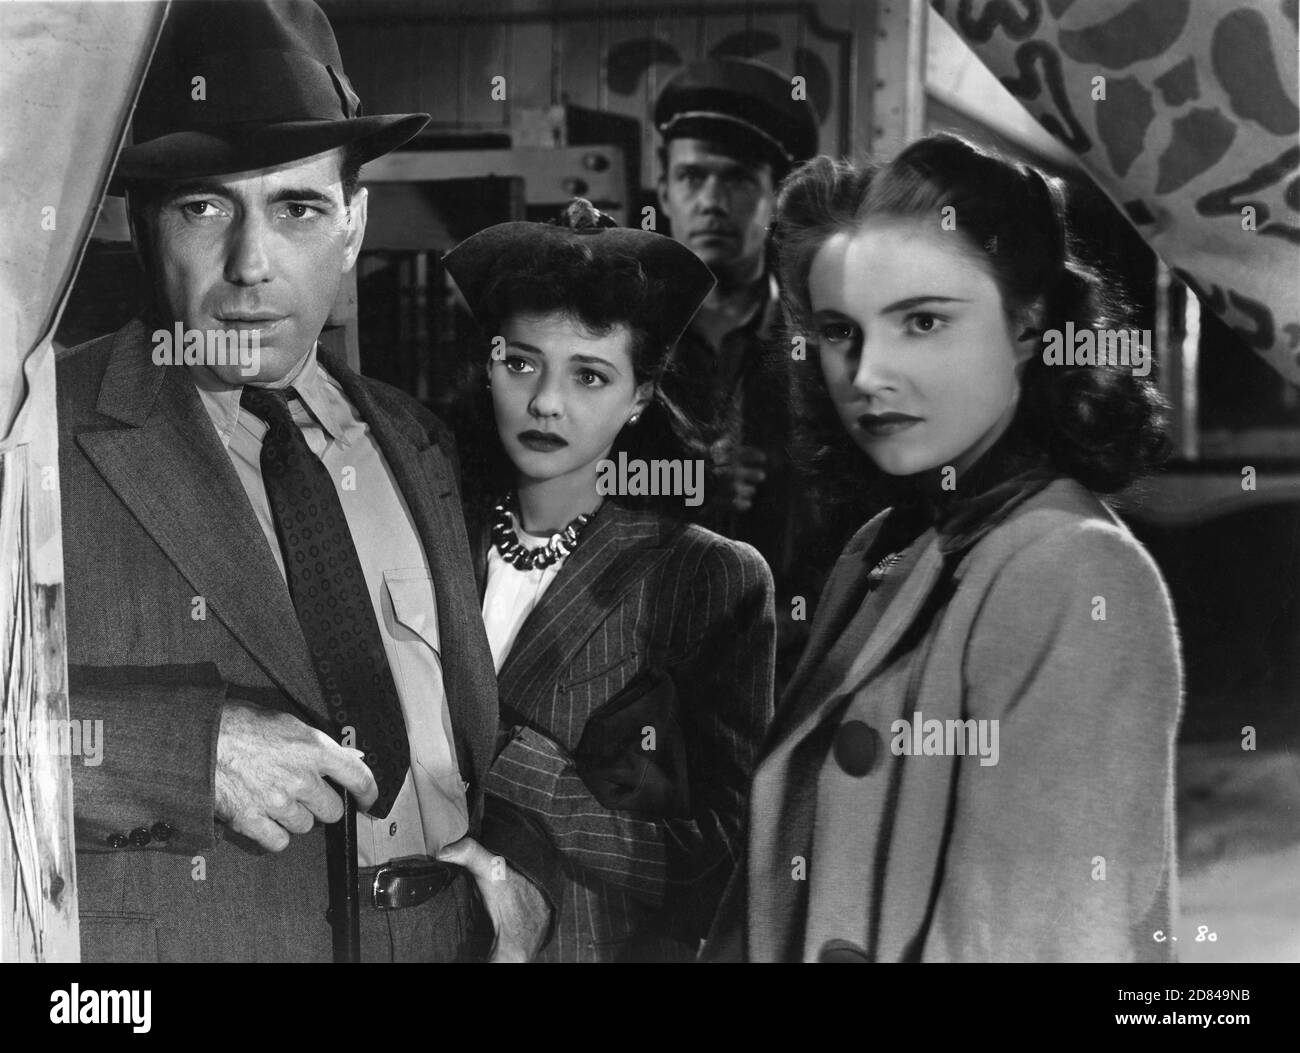 HUMPHREY BOGART SYLVIA SIDNEY JOHN RIDGELY and JOAN LESLIE in THE WAGONS ROLL AT NIGHT 1941 director RAY ENRIGHT  Warner Bros. Stock Photo